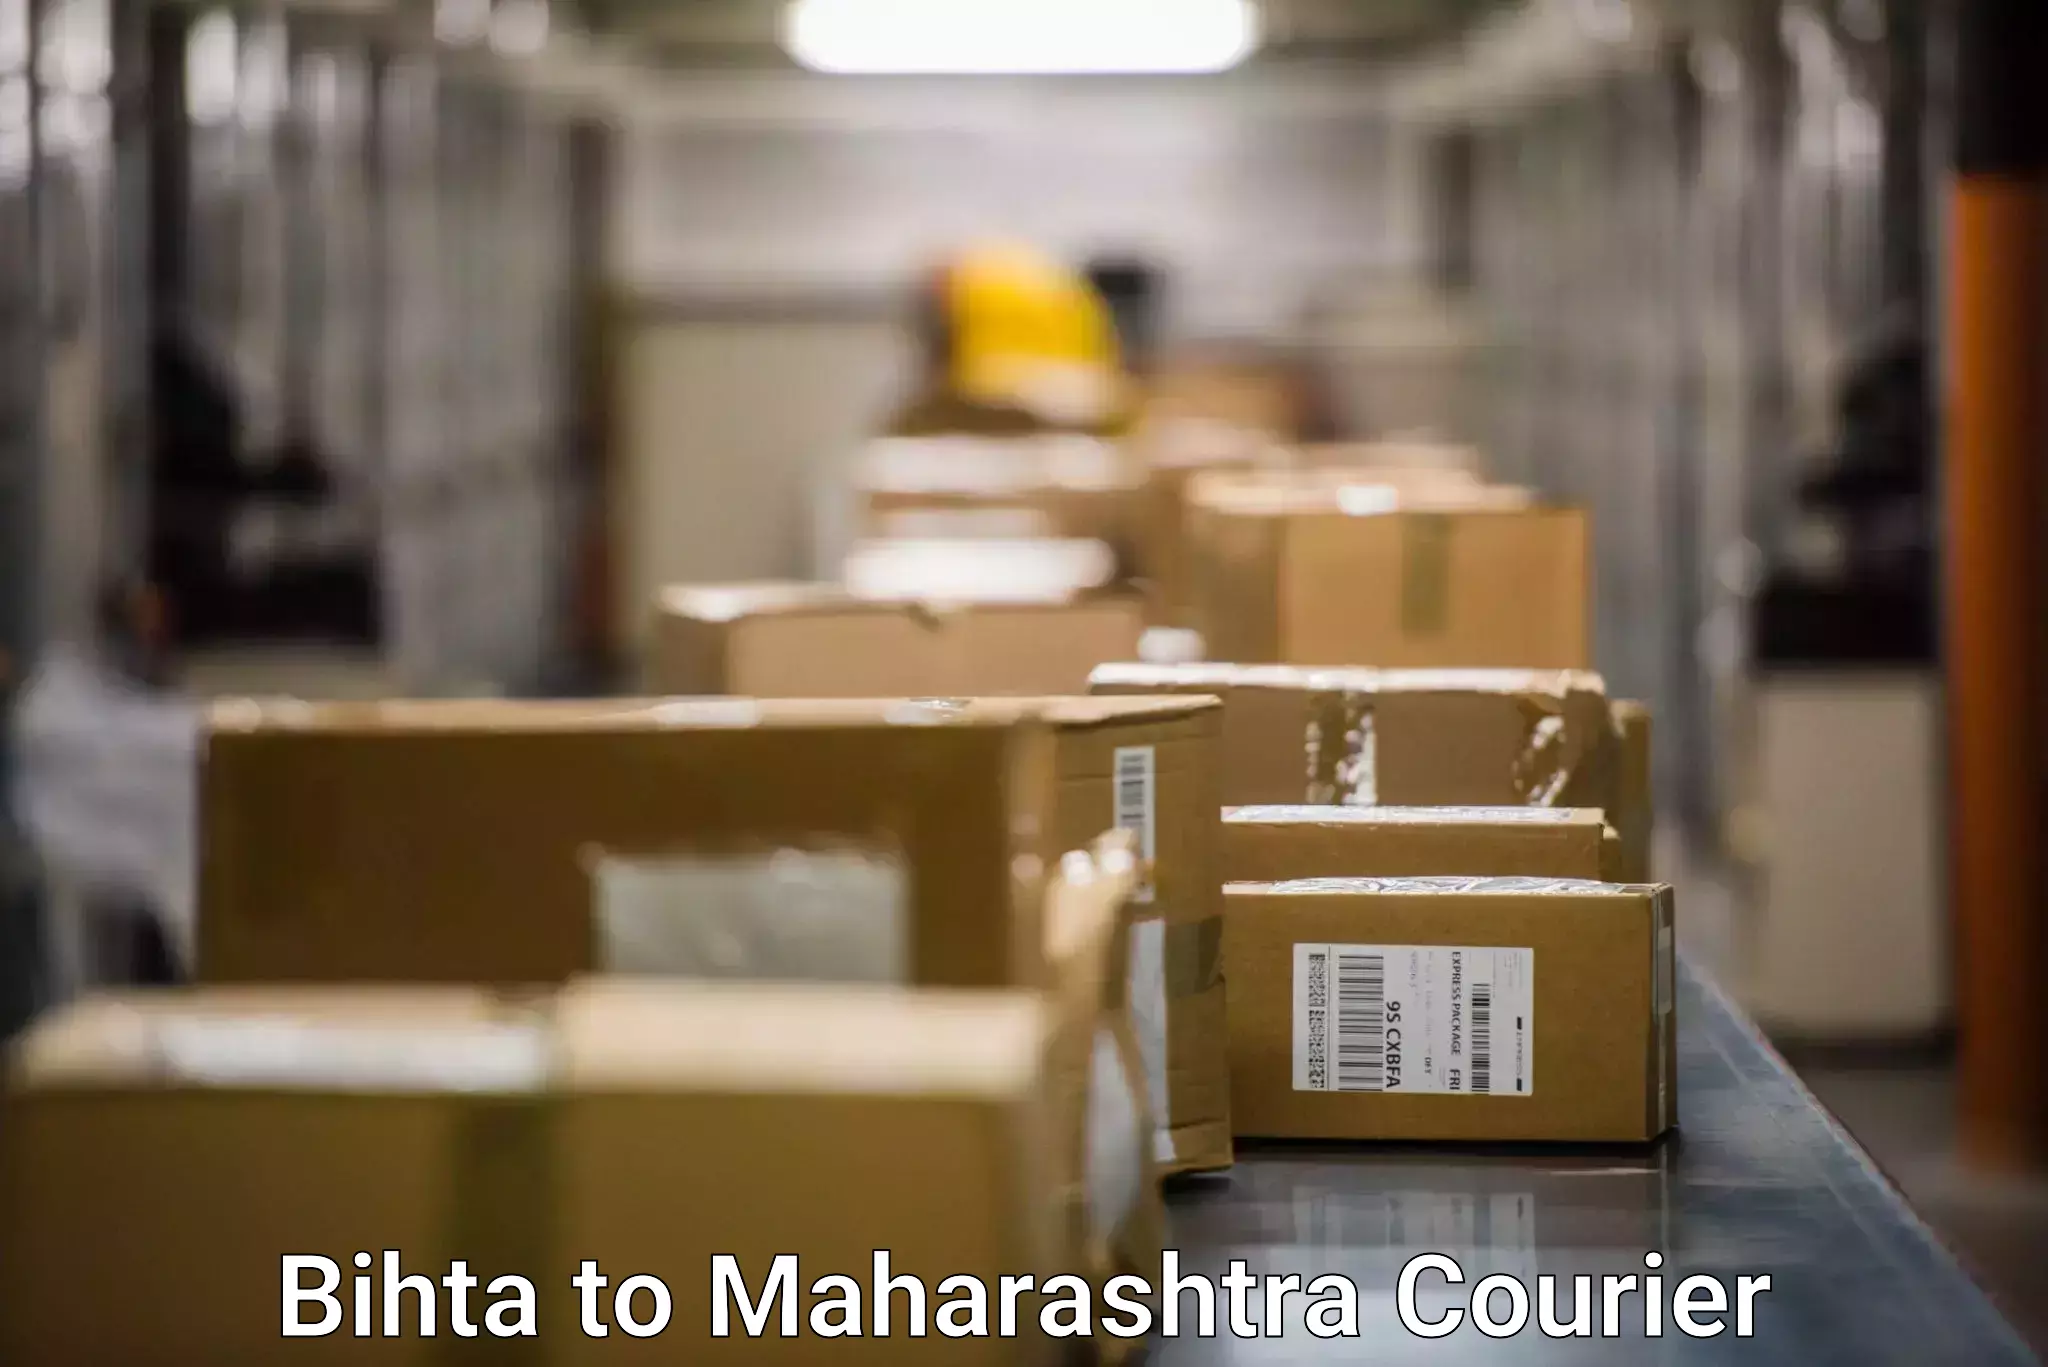 Expedited shipping methods Bihta to Maharashtra